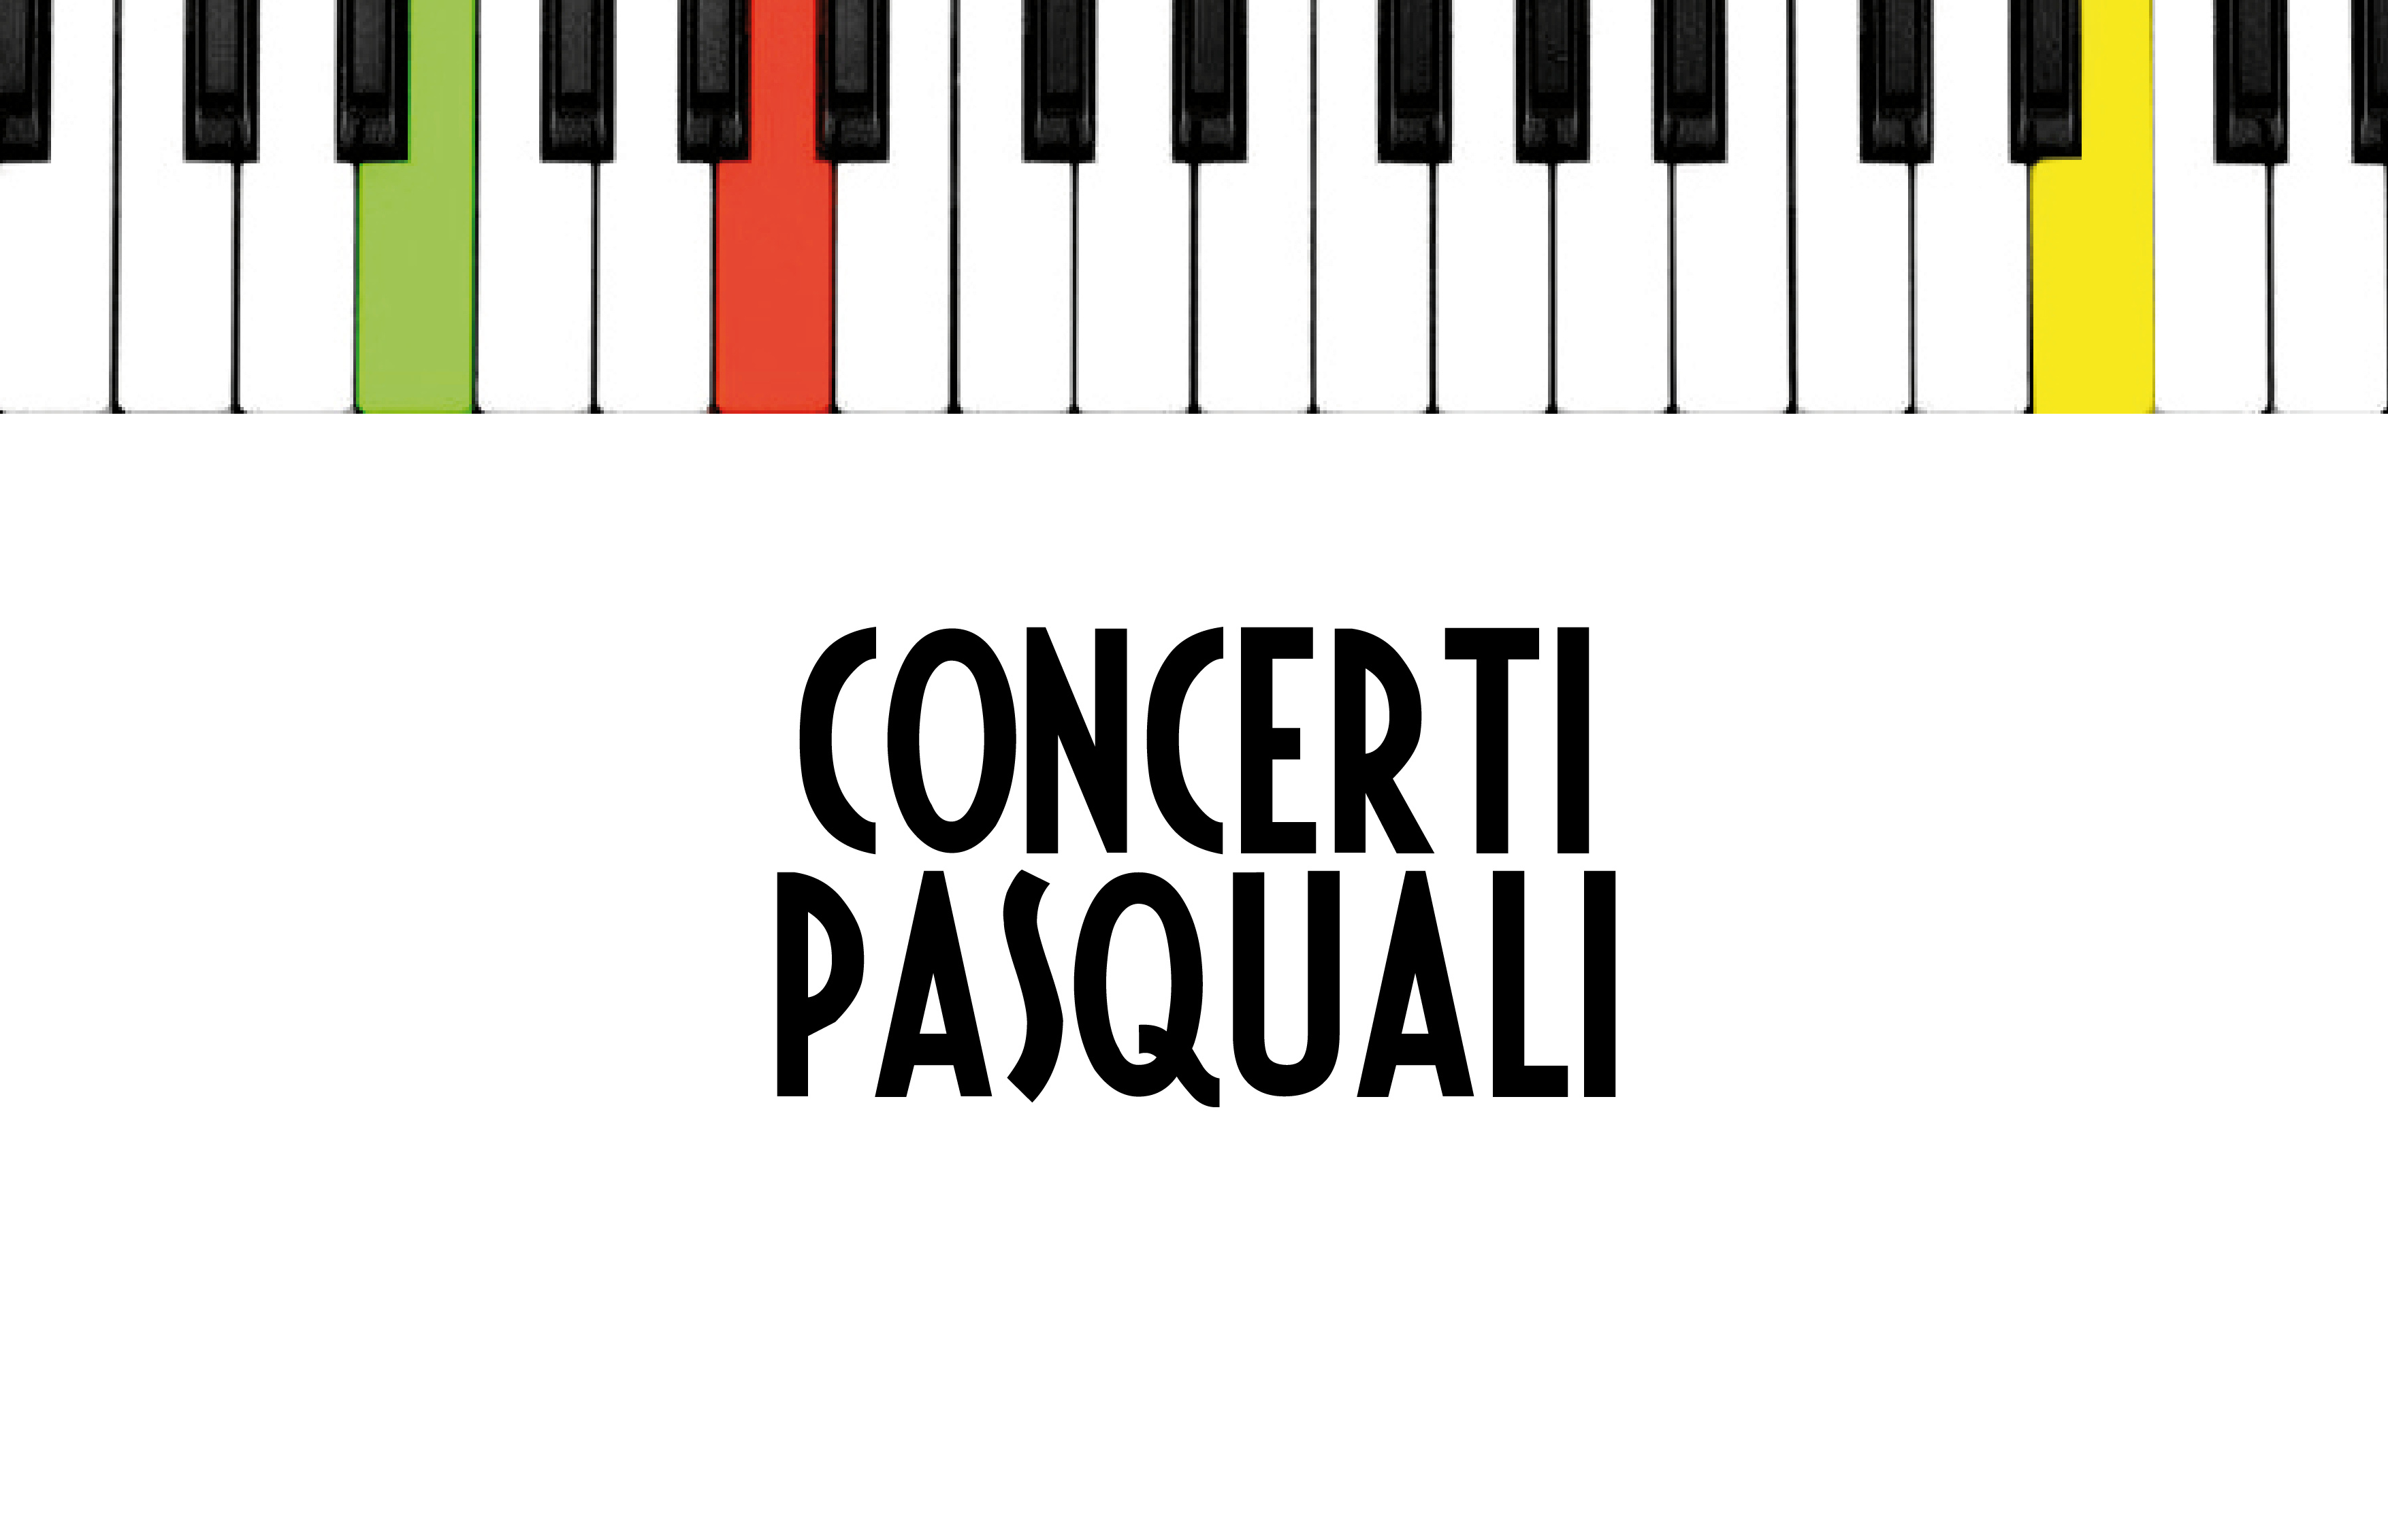 Concerti Pasquali